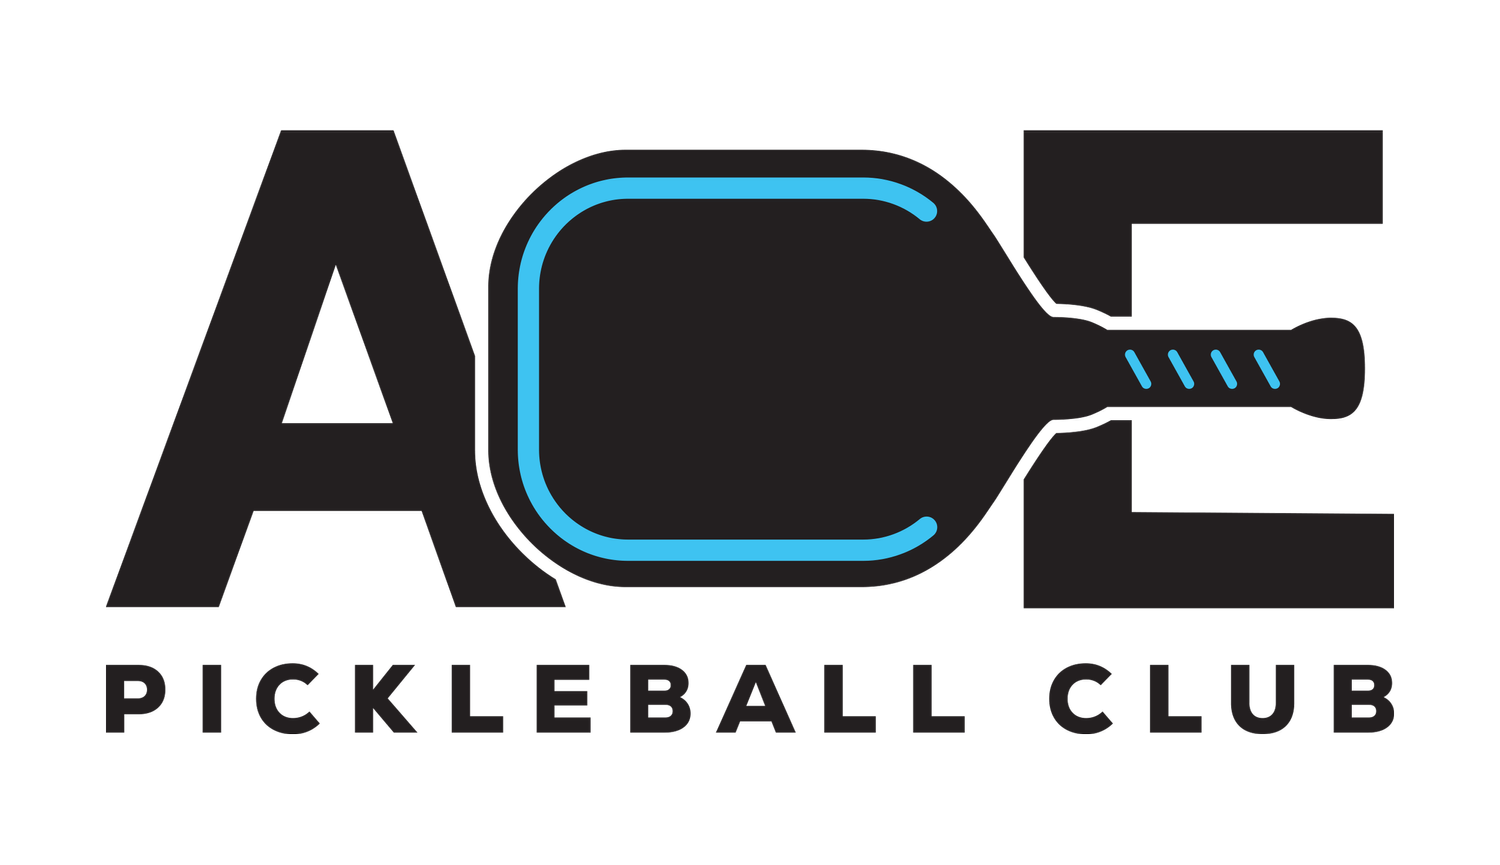 Ace Pickleball Club